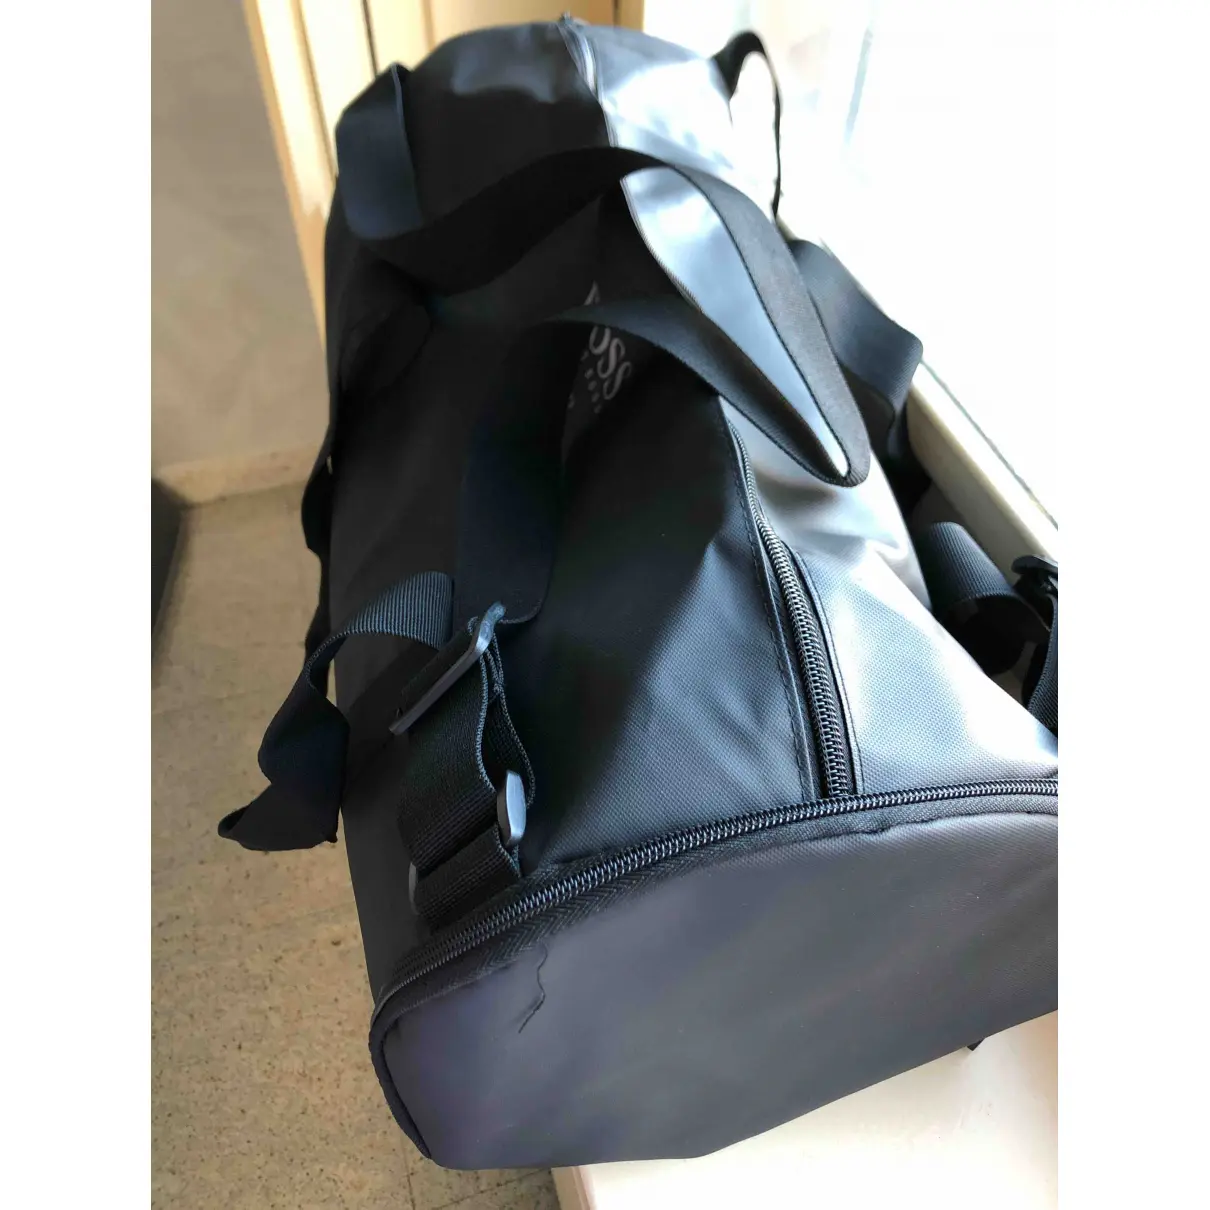 Buy Hugo Boss Exotic leathers travel bag online